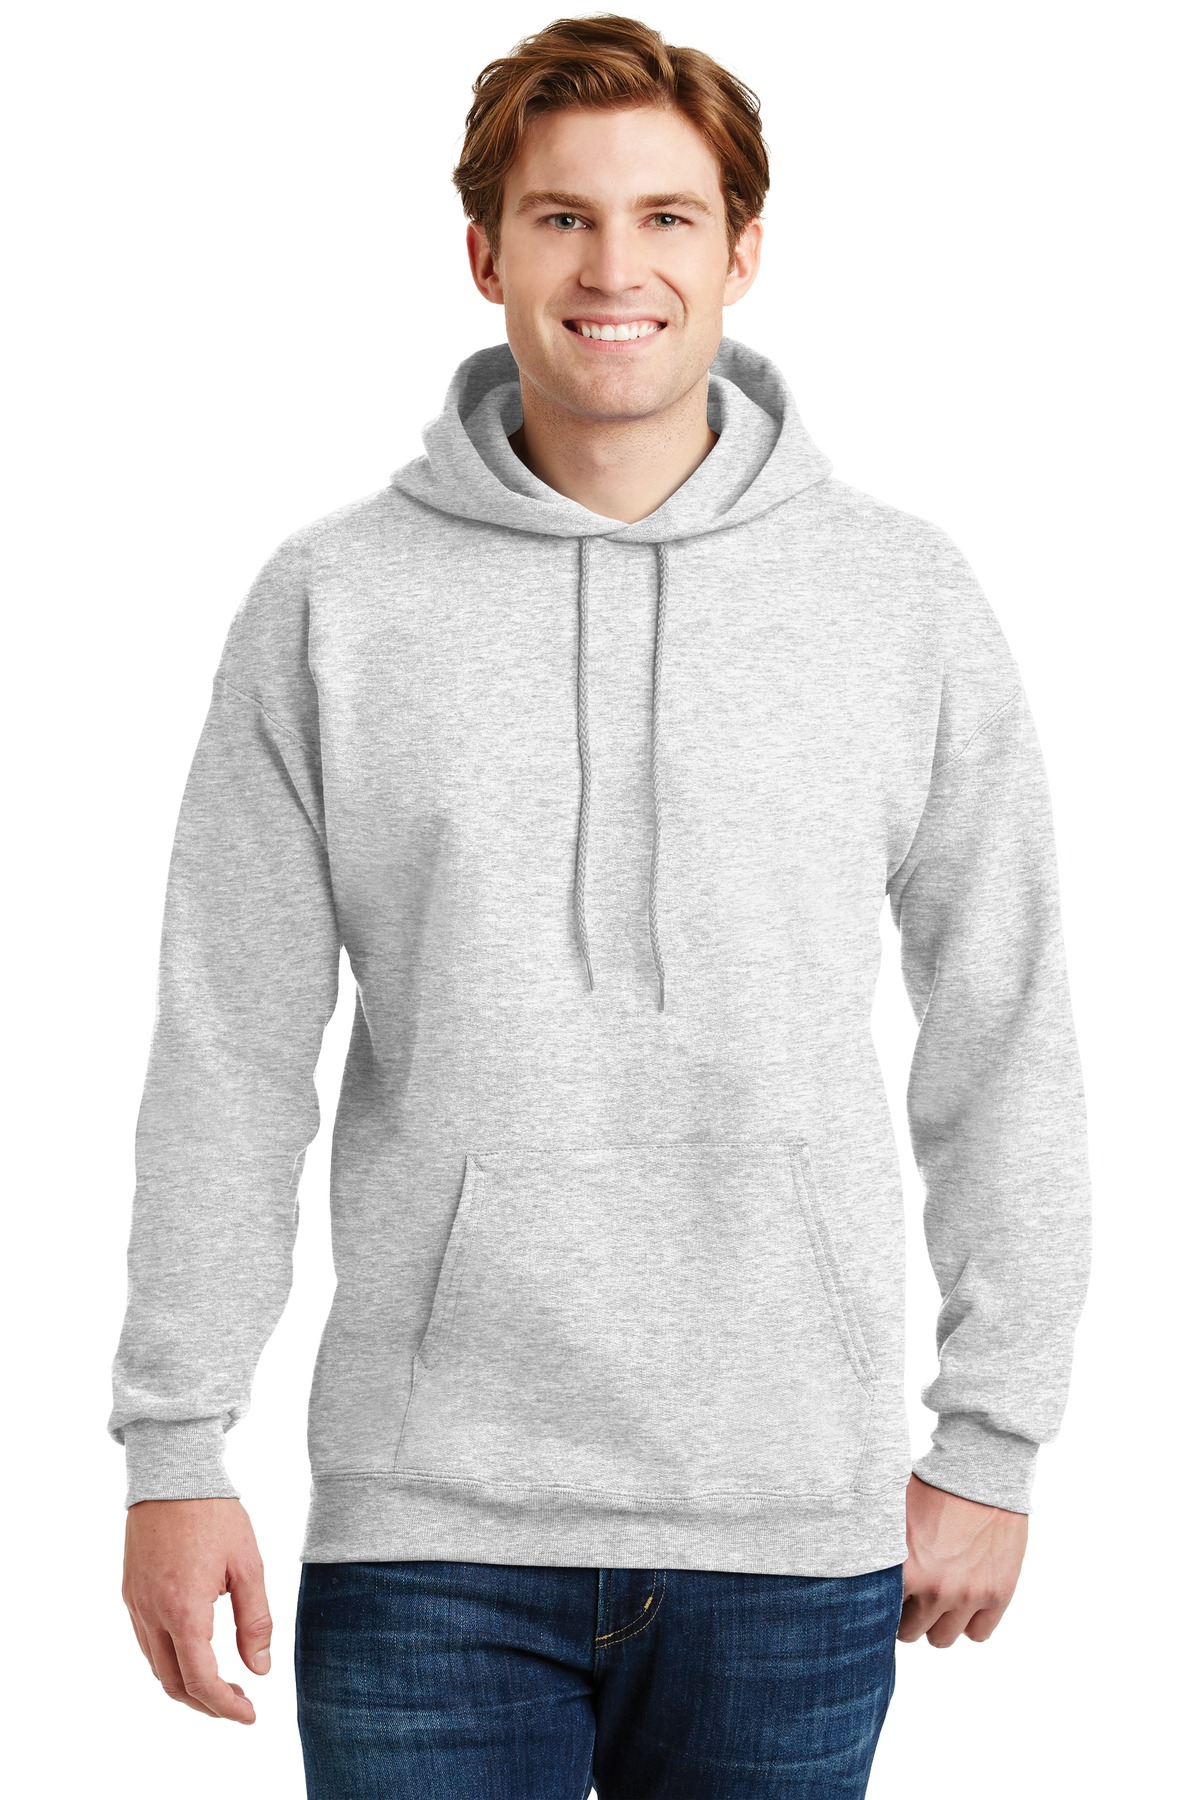 Hanes Ultimate Cotton - Pullover Hooded Sweatshirt....